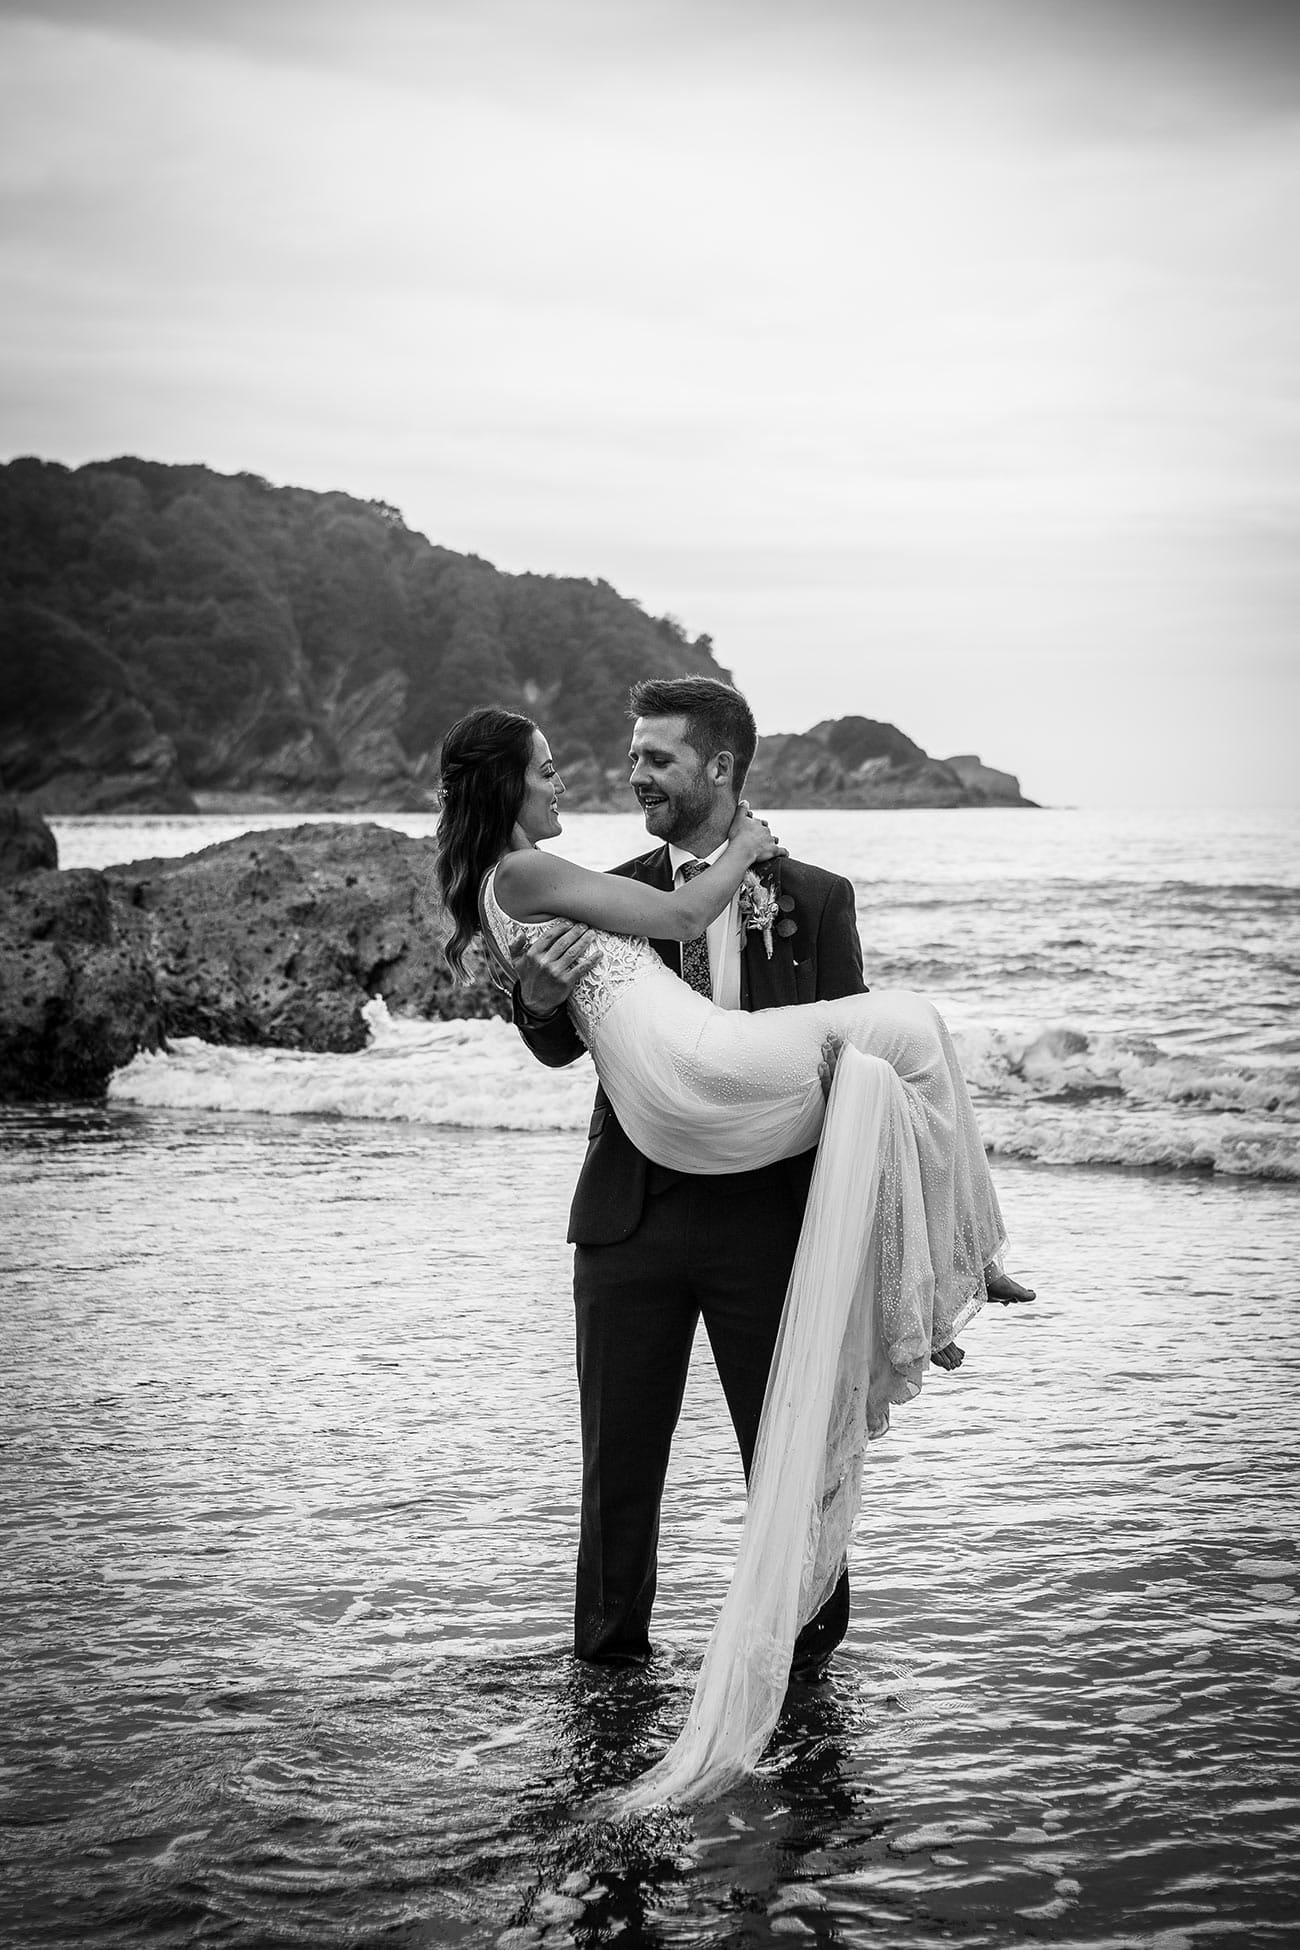 Wedding Photographer Devon Freeform Images